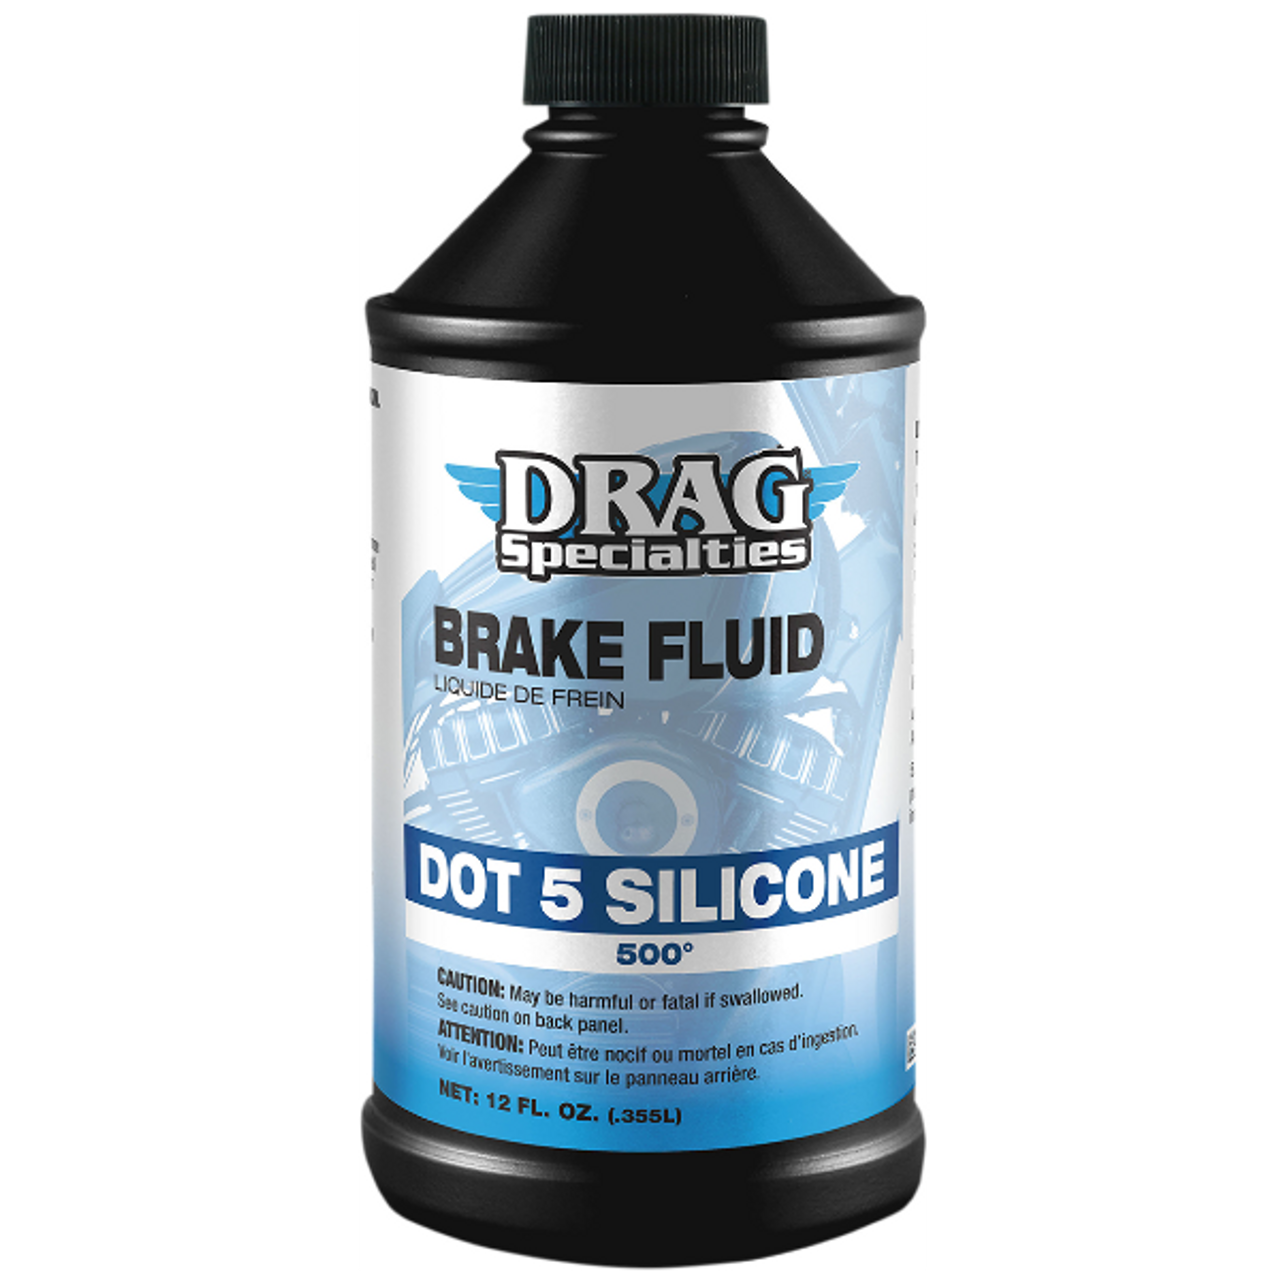 DOT 5 Brake Fluid - Main Street Parts & Tools